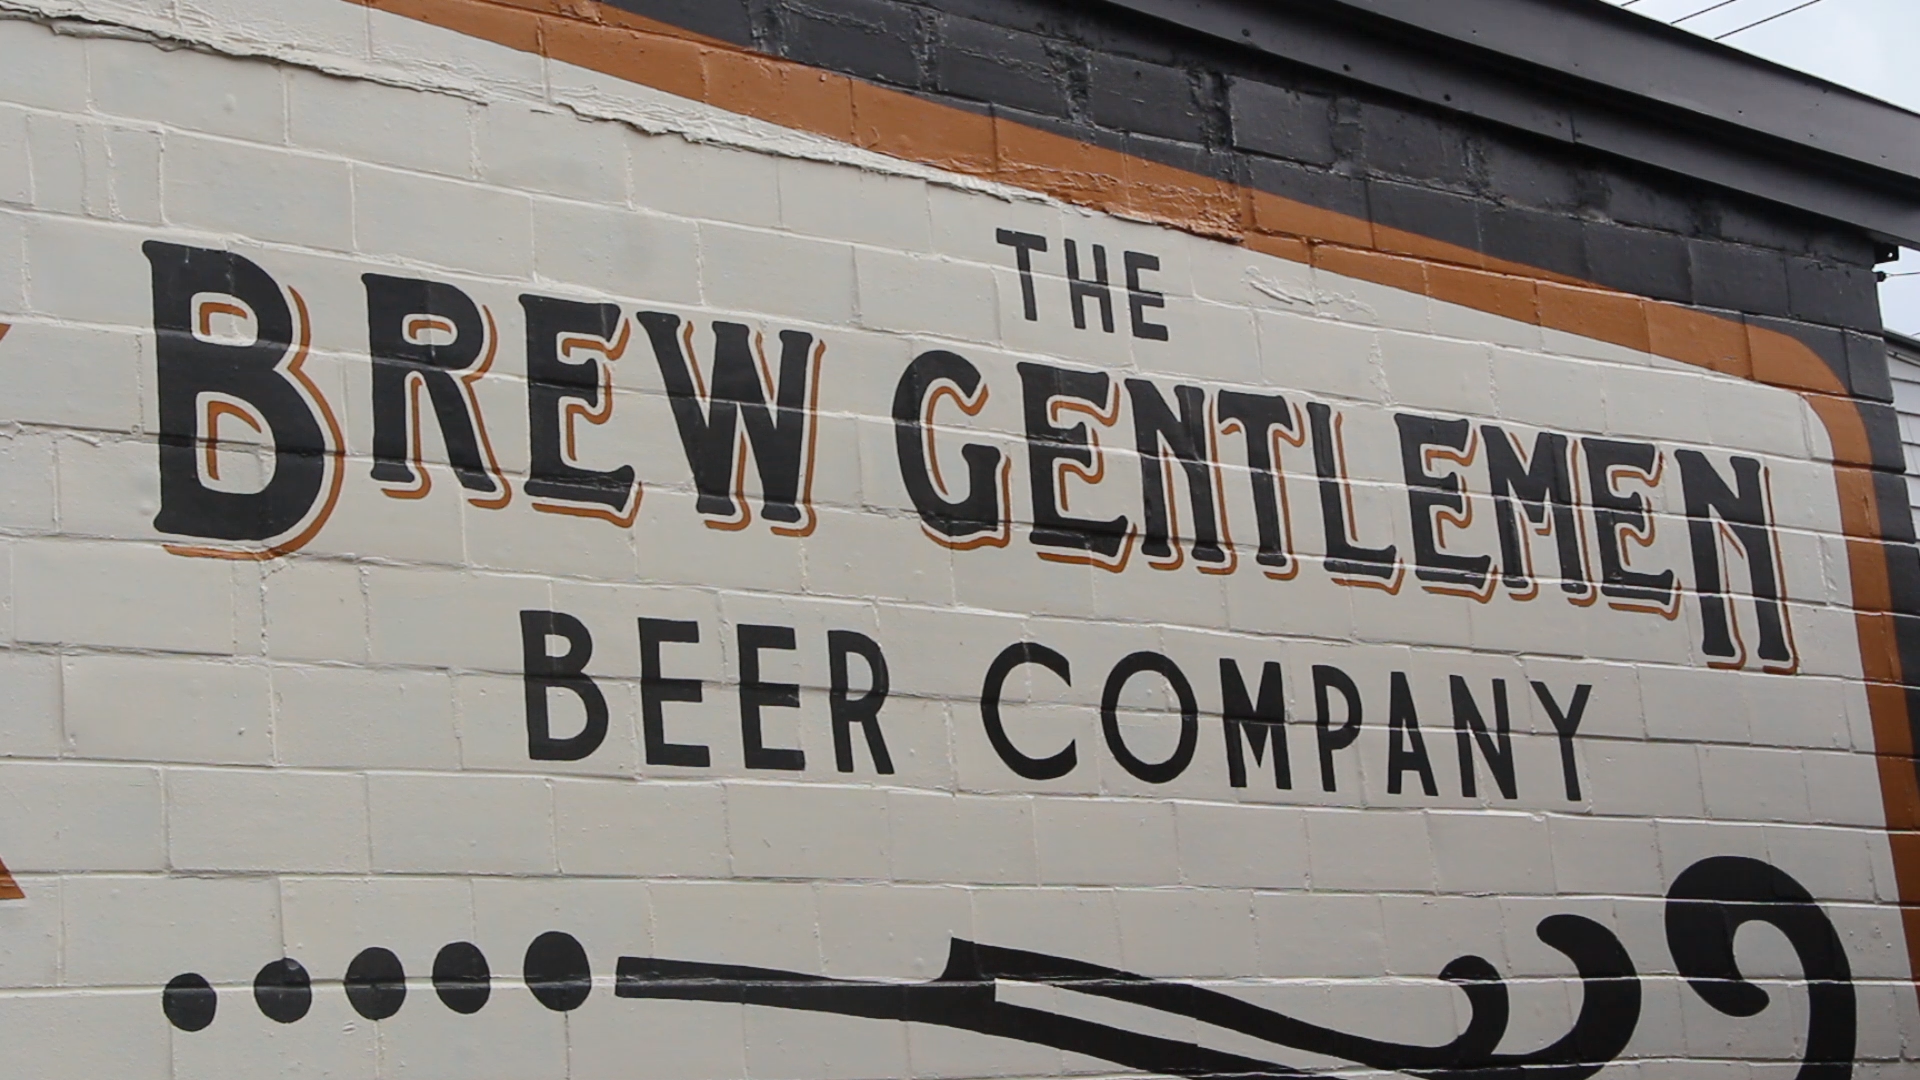 The Brew Gentlemen Beer Co. from the film Blood, Sweat and Beer